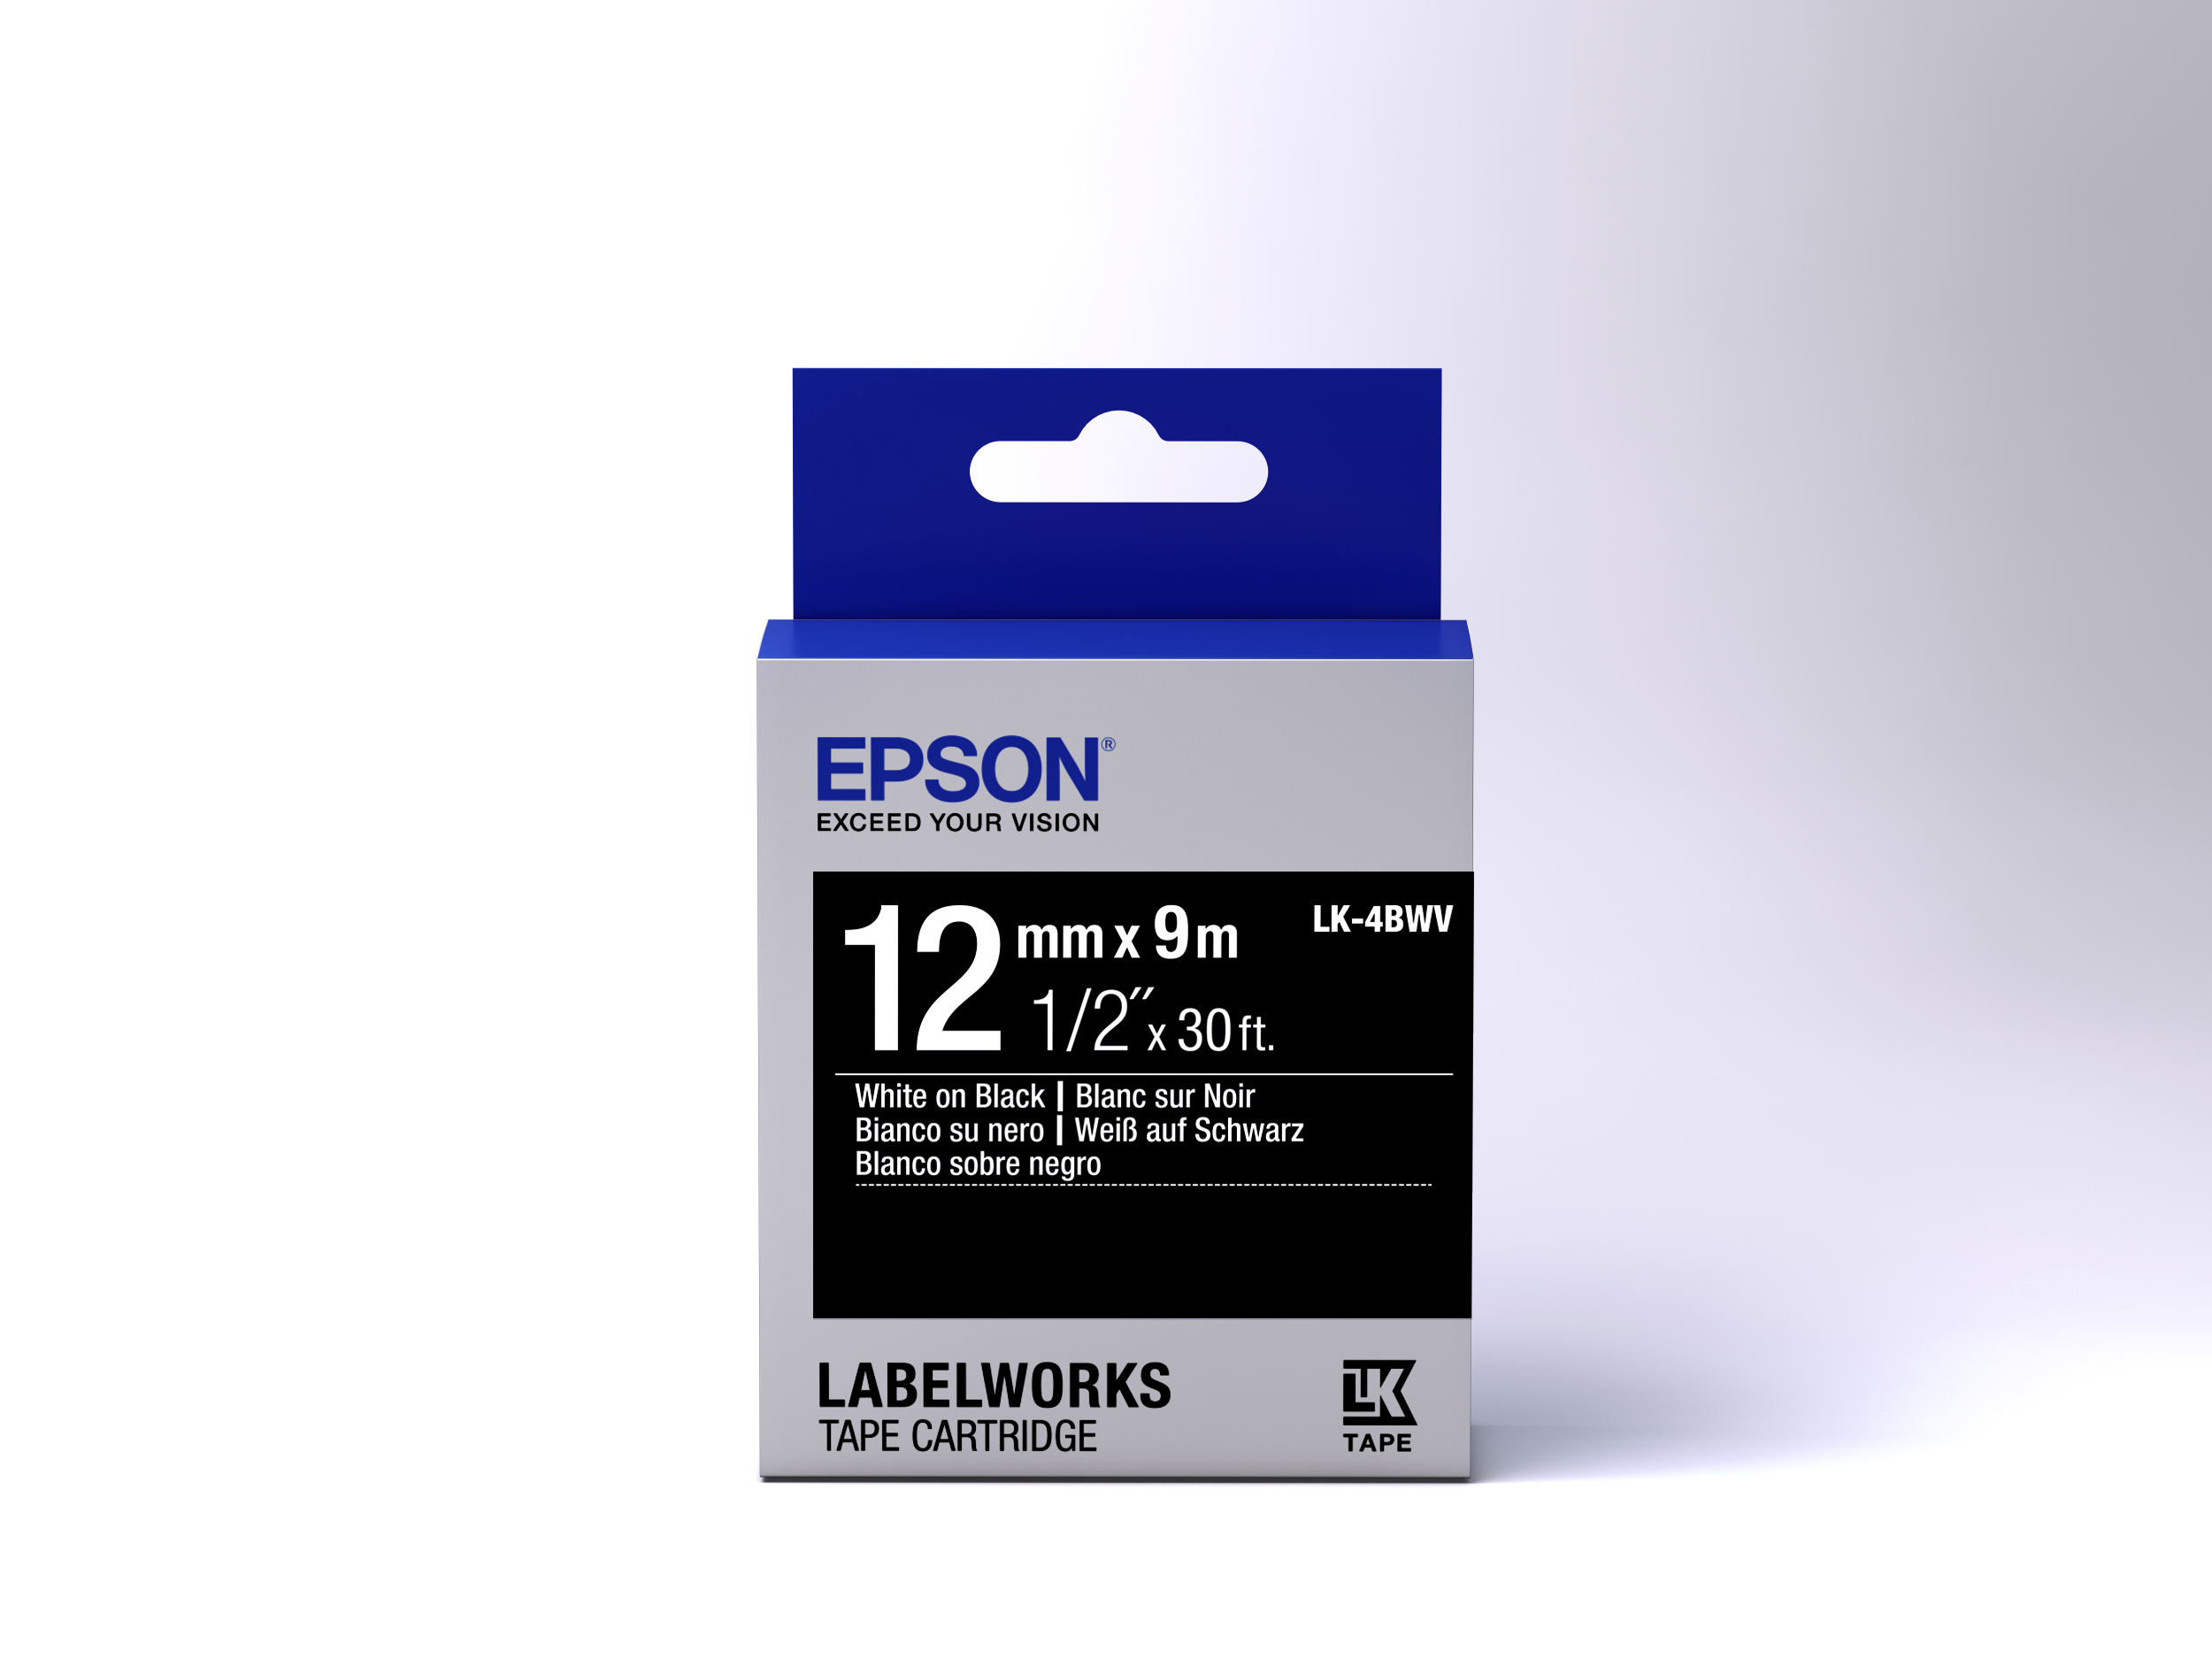 EPSON Paper Label LK-4BWV